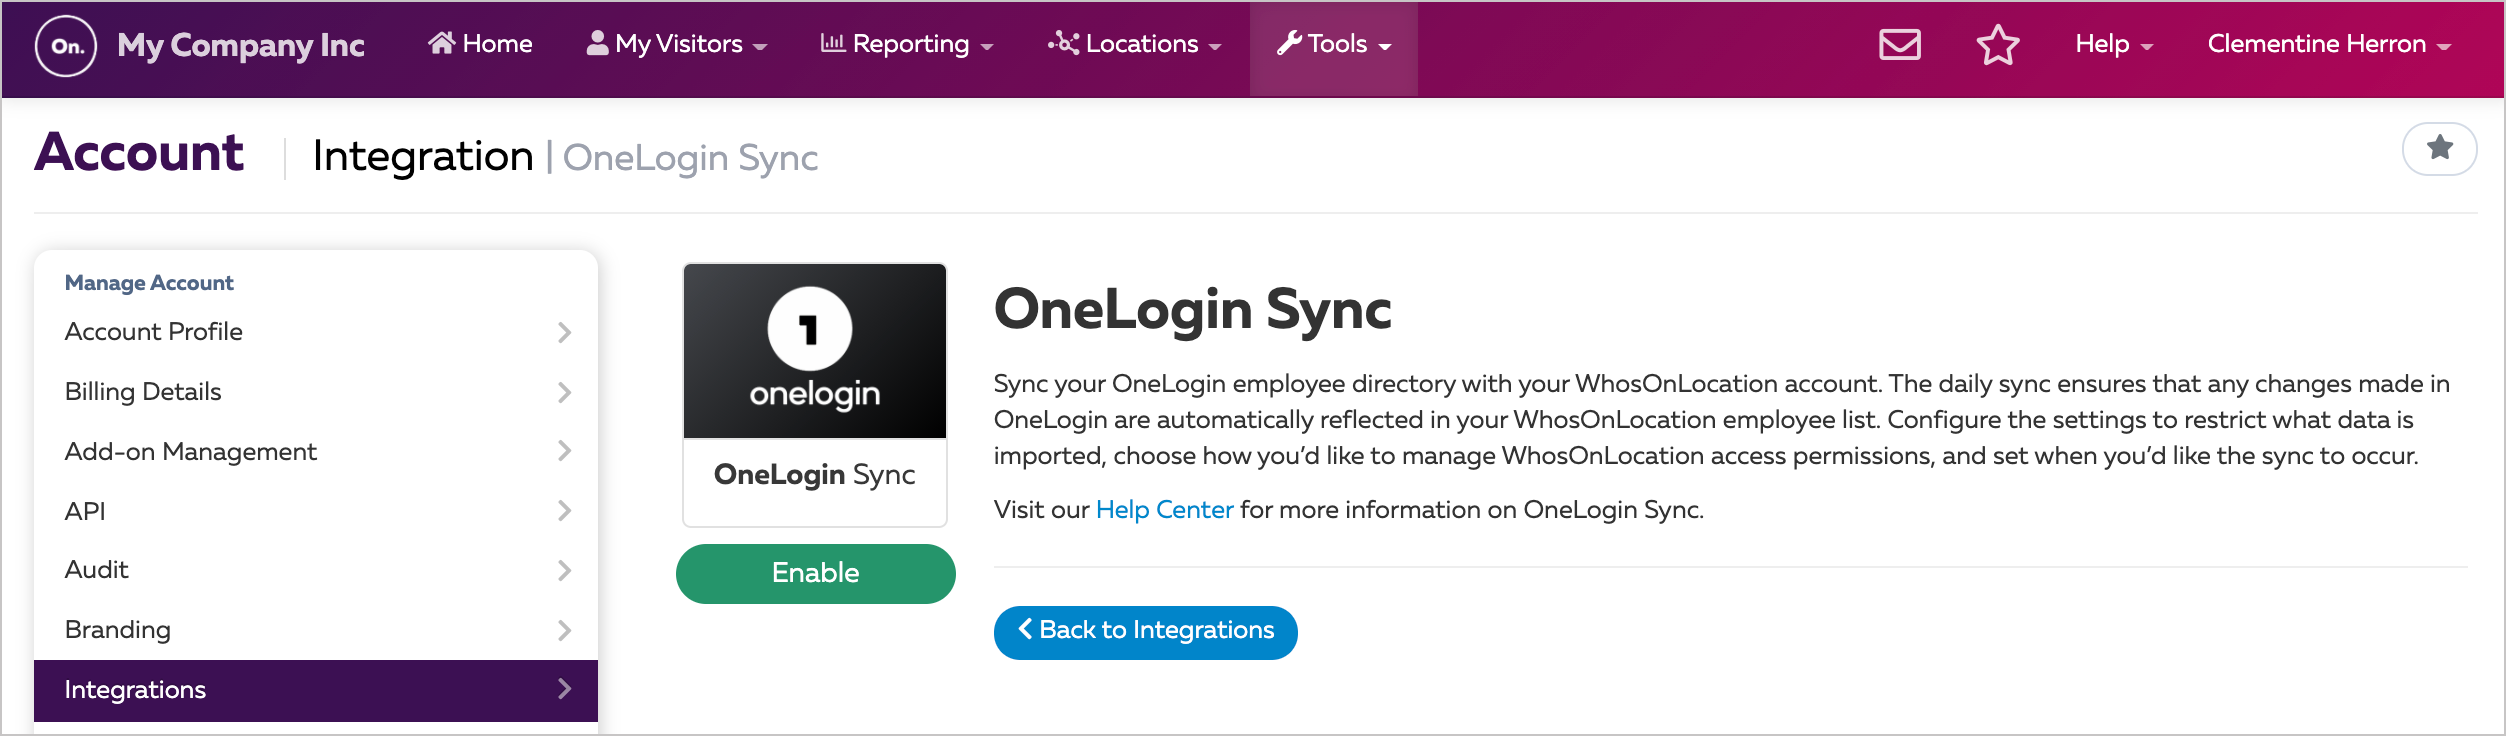 OneLoginSync-Enable-Integration.png